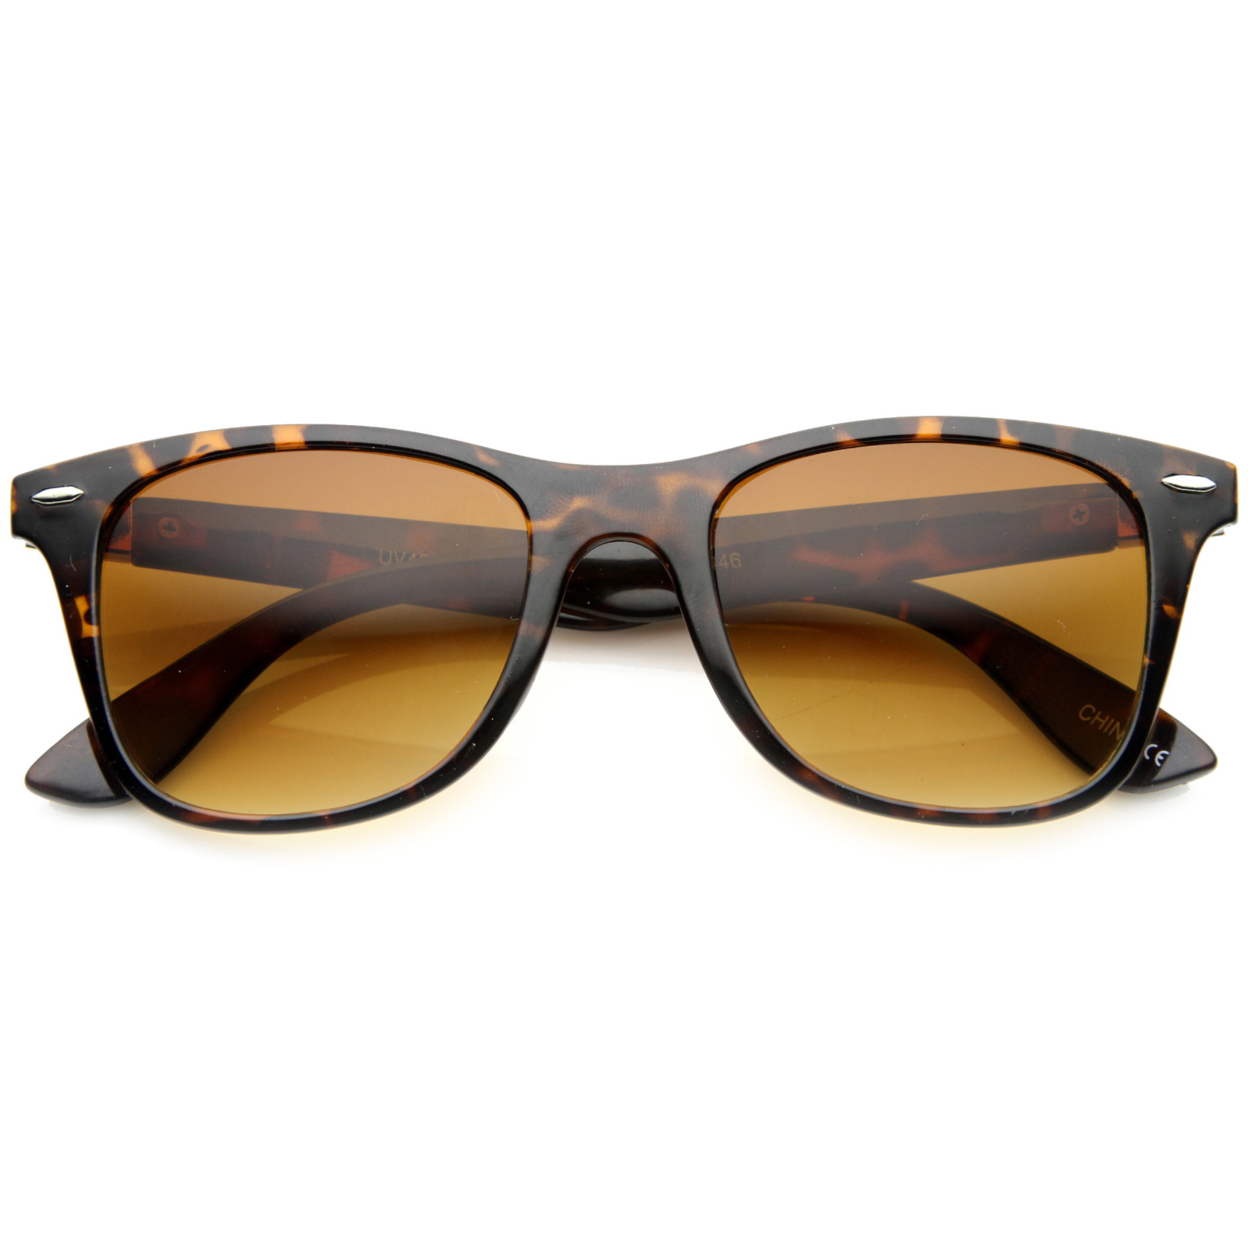 Modern Plastic Horn Rimmed Sunglasses Metal Temples 9750 - Shiny-Black Lavender